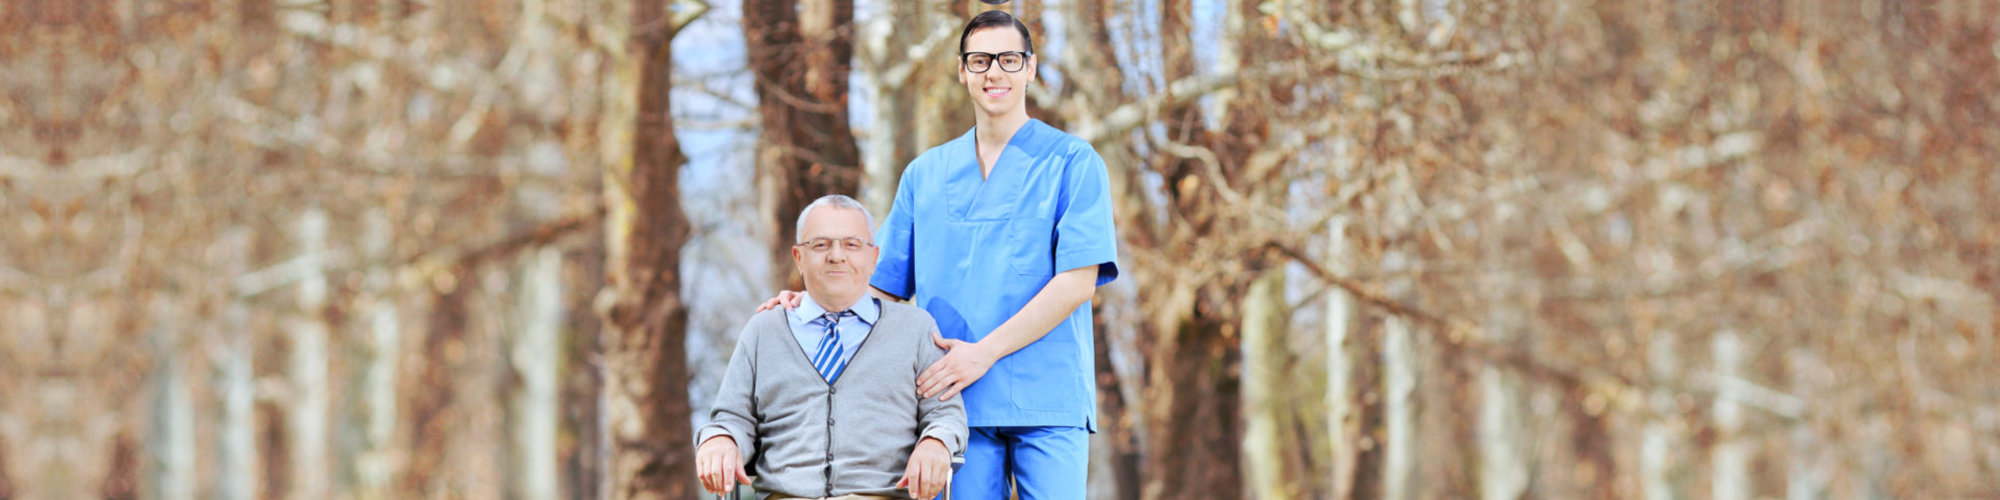 male nurse and senior man are smiling